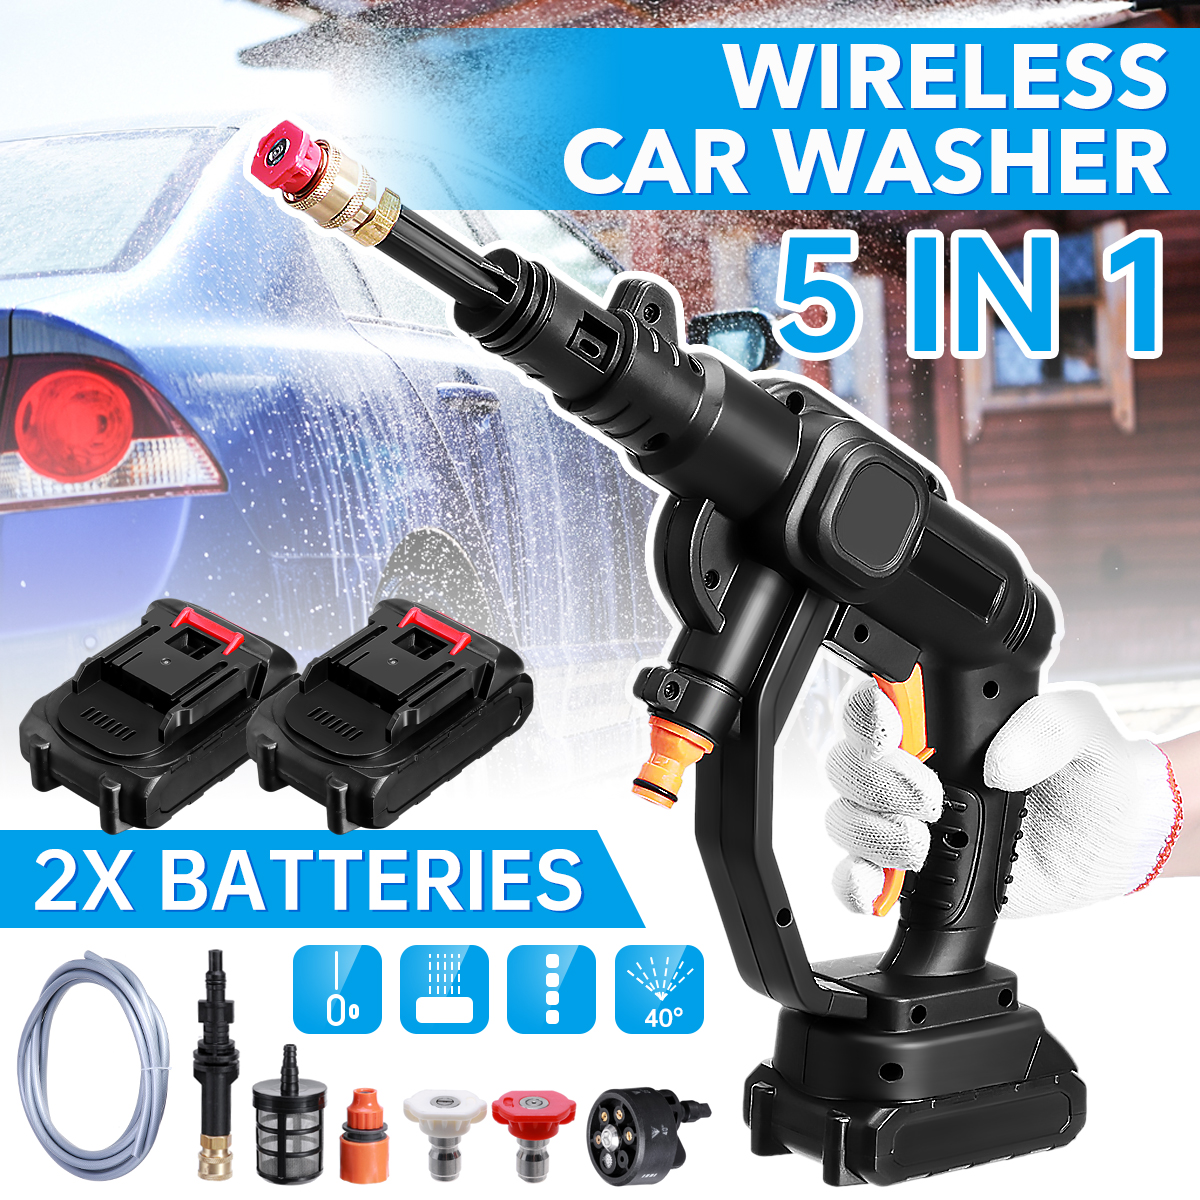 21V-Cordless-High-Pressure-Cleaner-Car-Washer-Spray-Guns-Water-Sprayer-Car-Washing-Machine-W-None12p-1854123-1